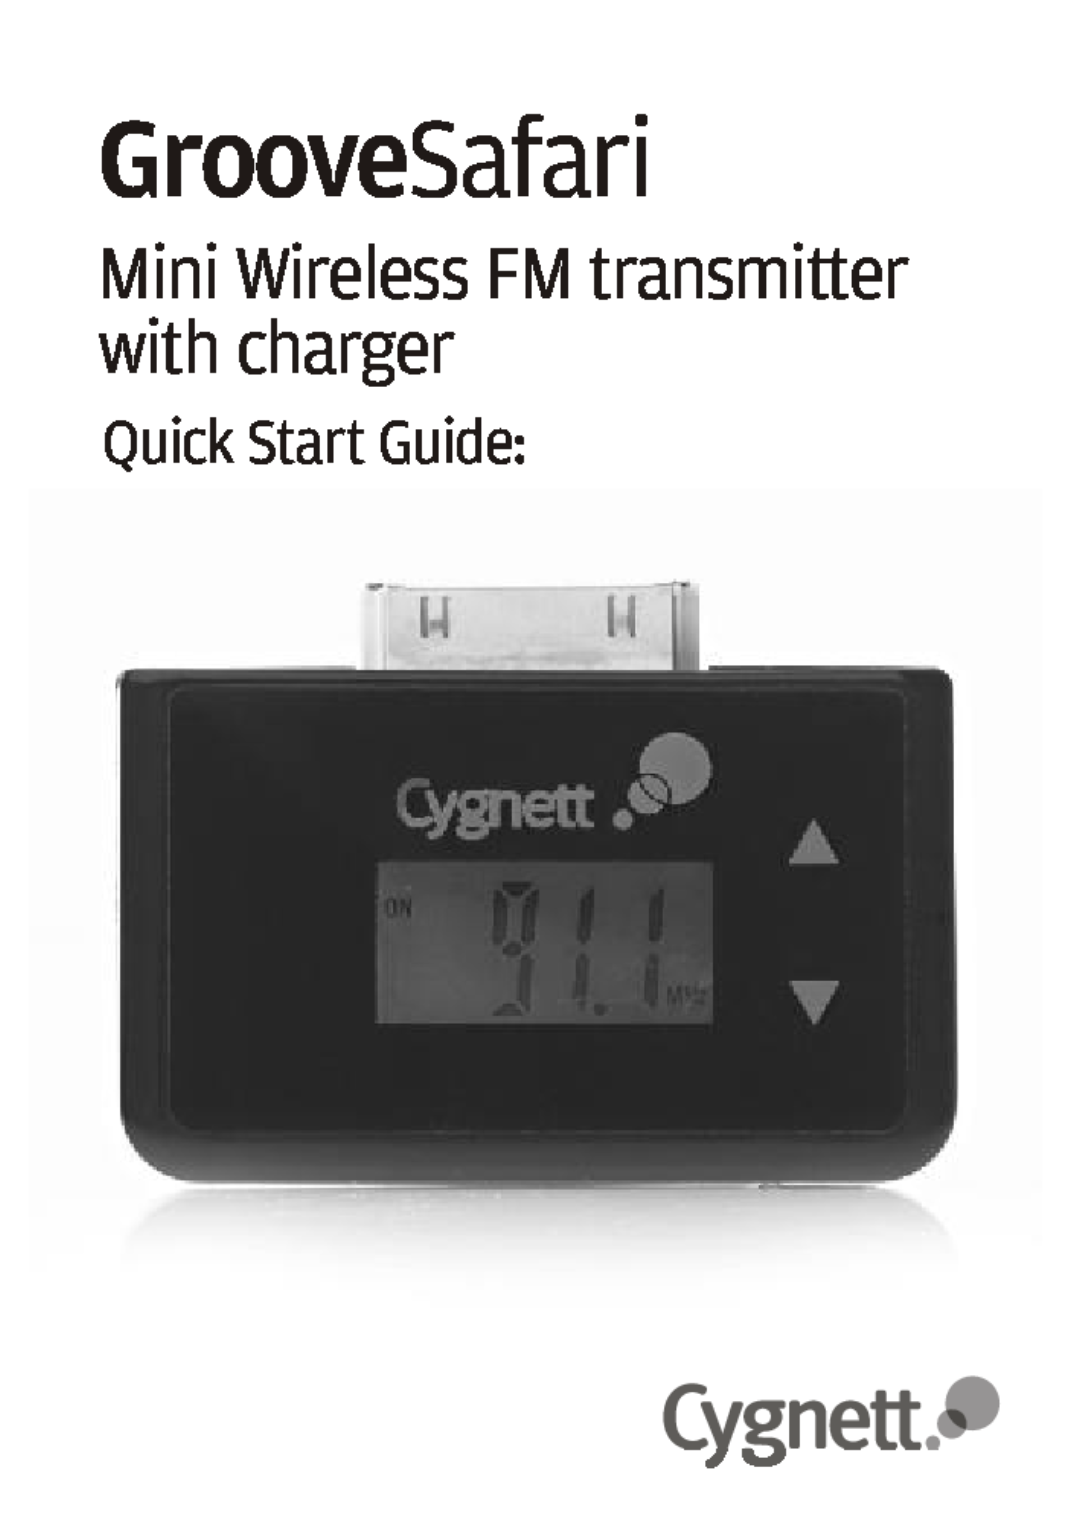 Cygnett manual GrooveSafari, Mini Wireless FM transmitter with charger, Quick Start Guide 